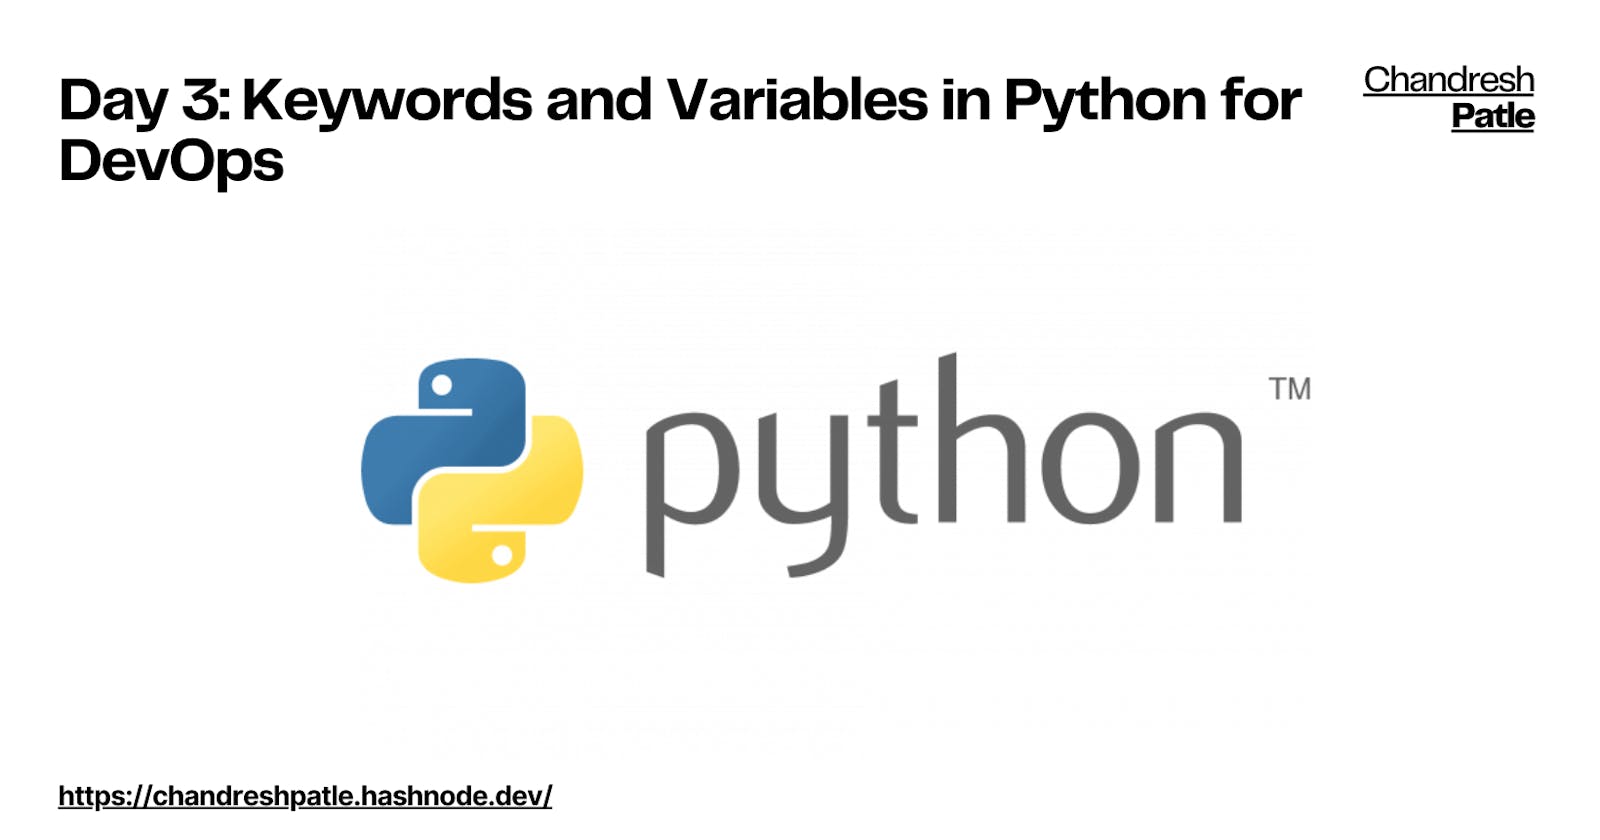 Day 3: Keywords and Variables in Python for DevOps